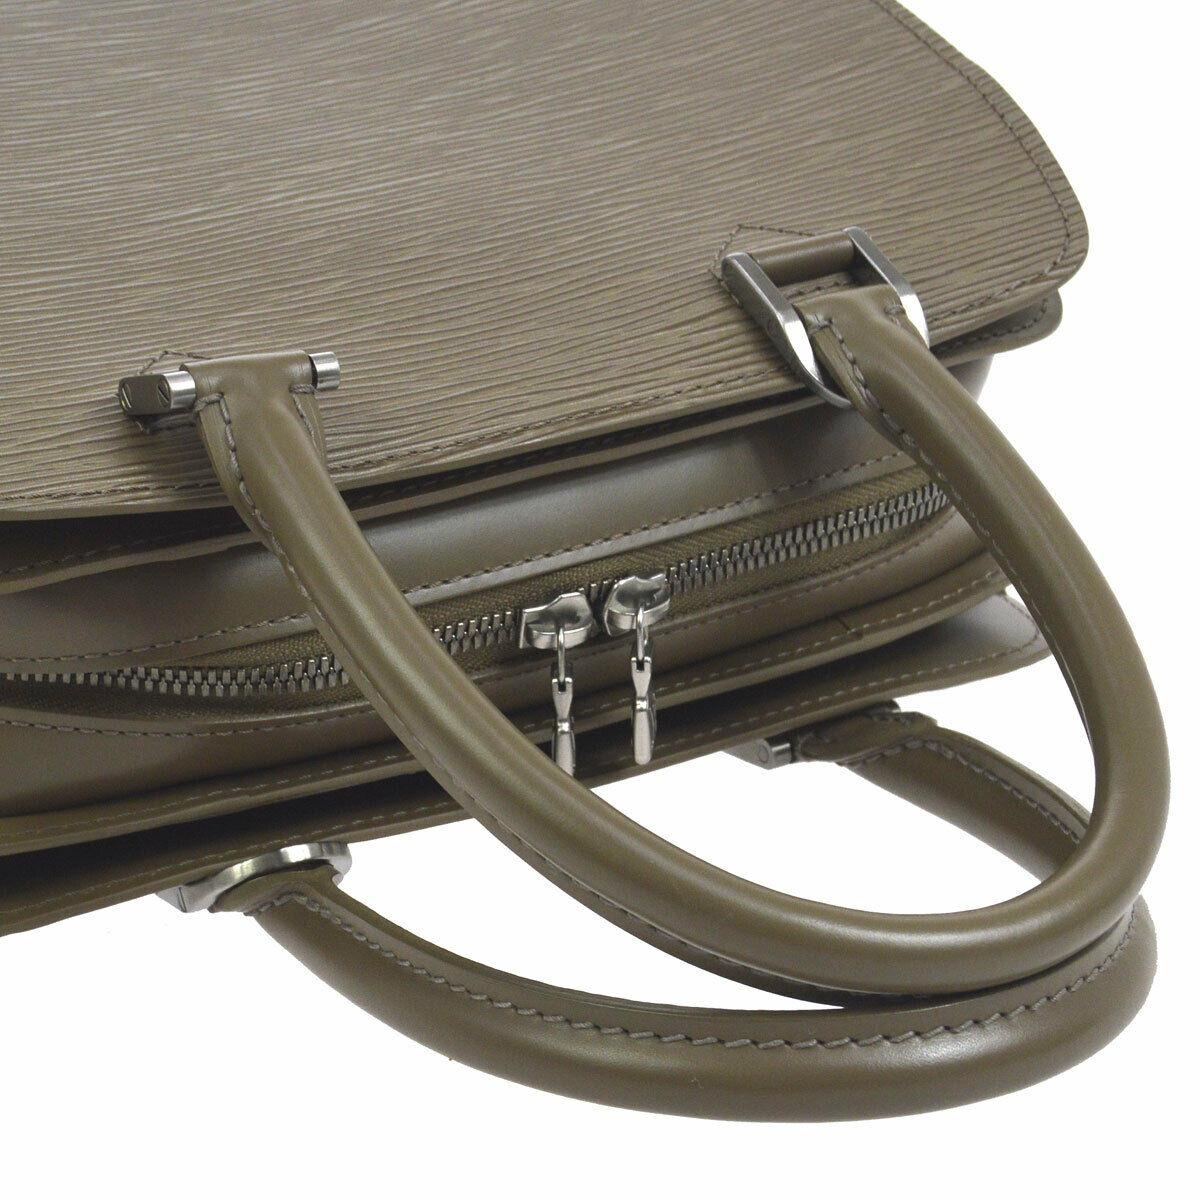 Louis Vuitton Epi Leather Zipper Top Evening Top Handle Satchel Bag

Epi
Silver tone hardware
Zipper closure
Woven lining
Handle drop 4.25